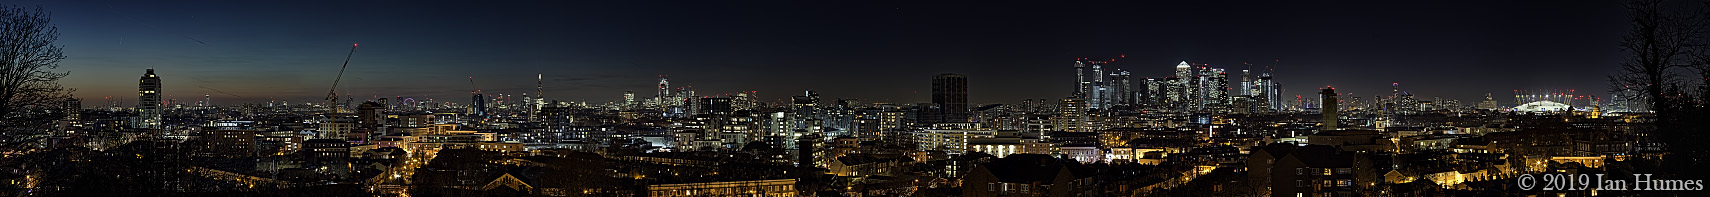 London At Night - Greenwich